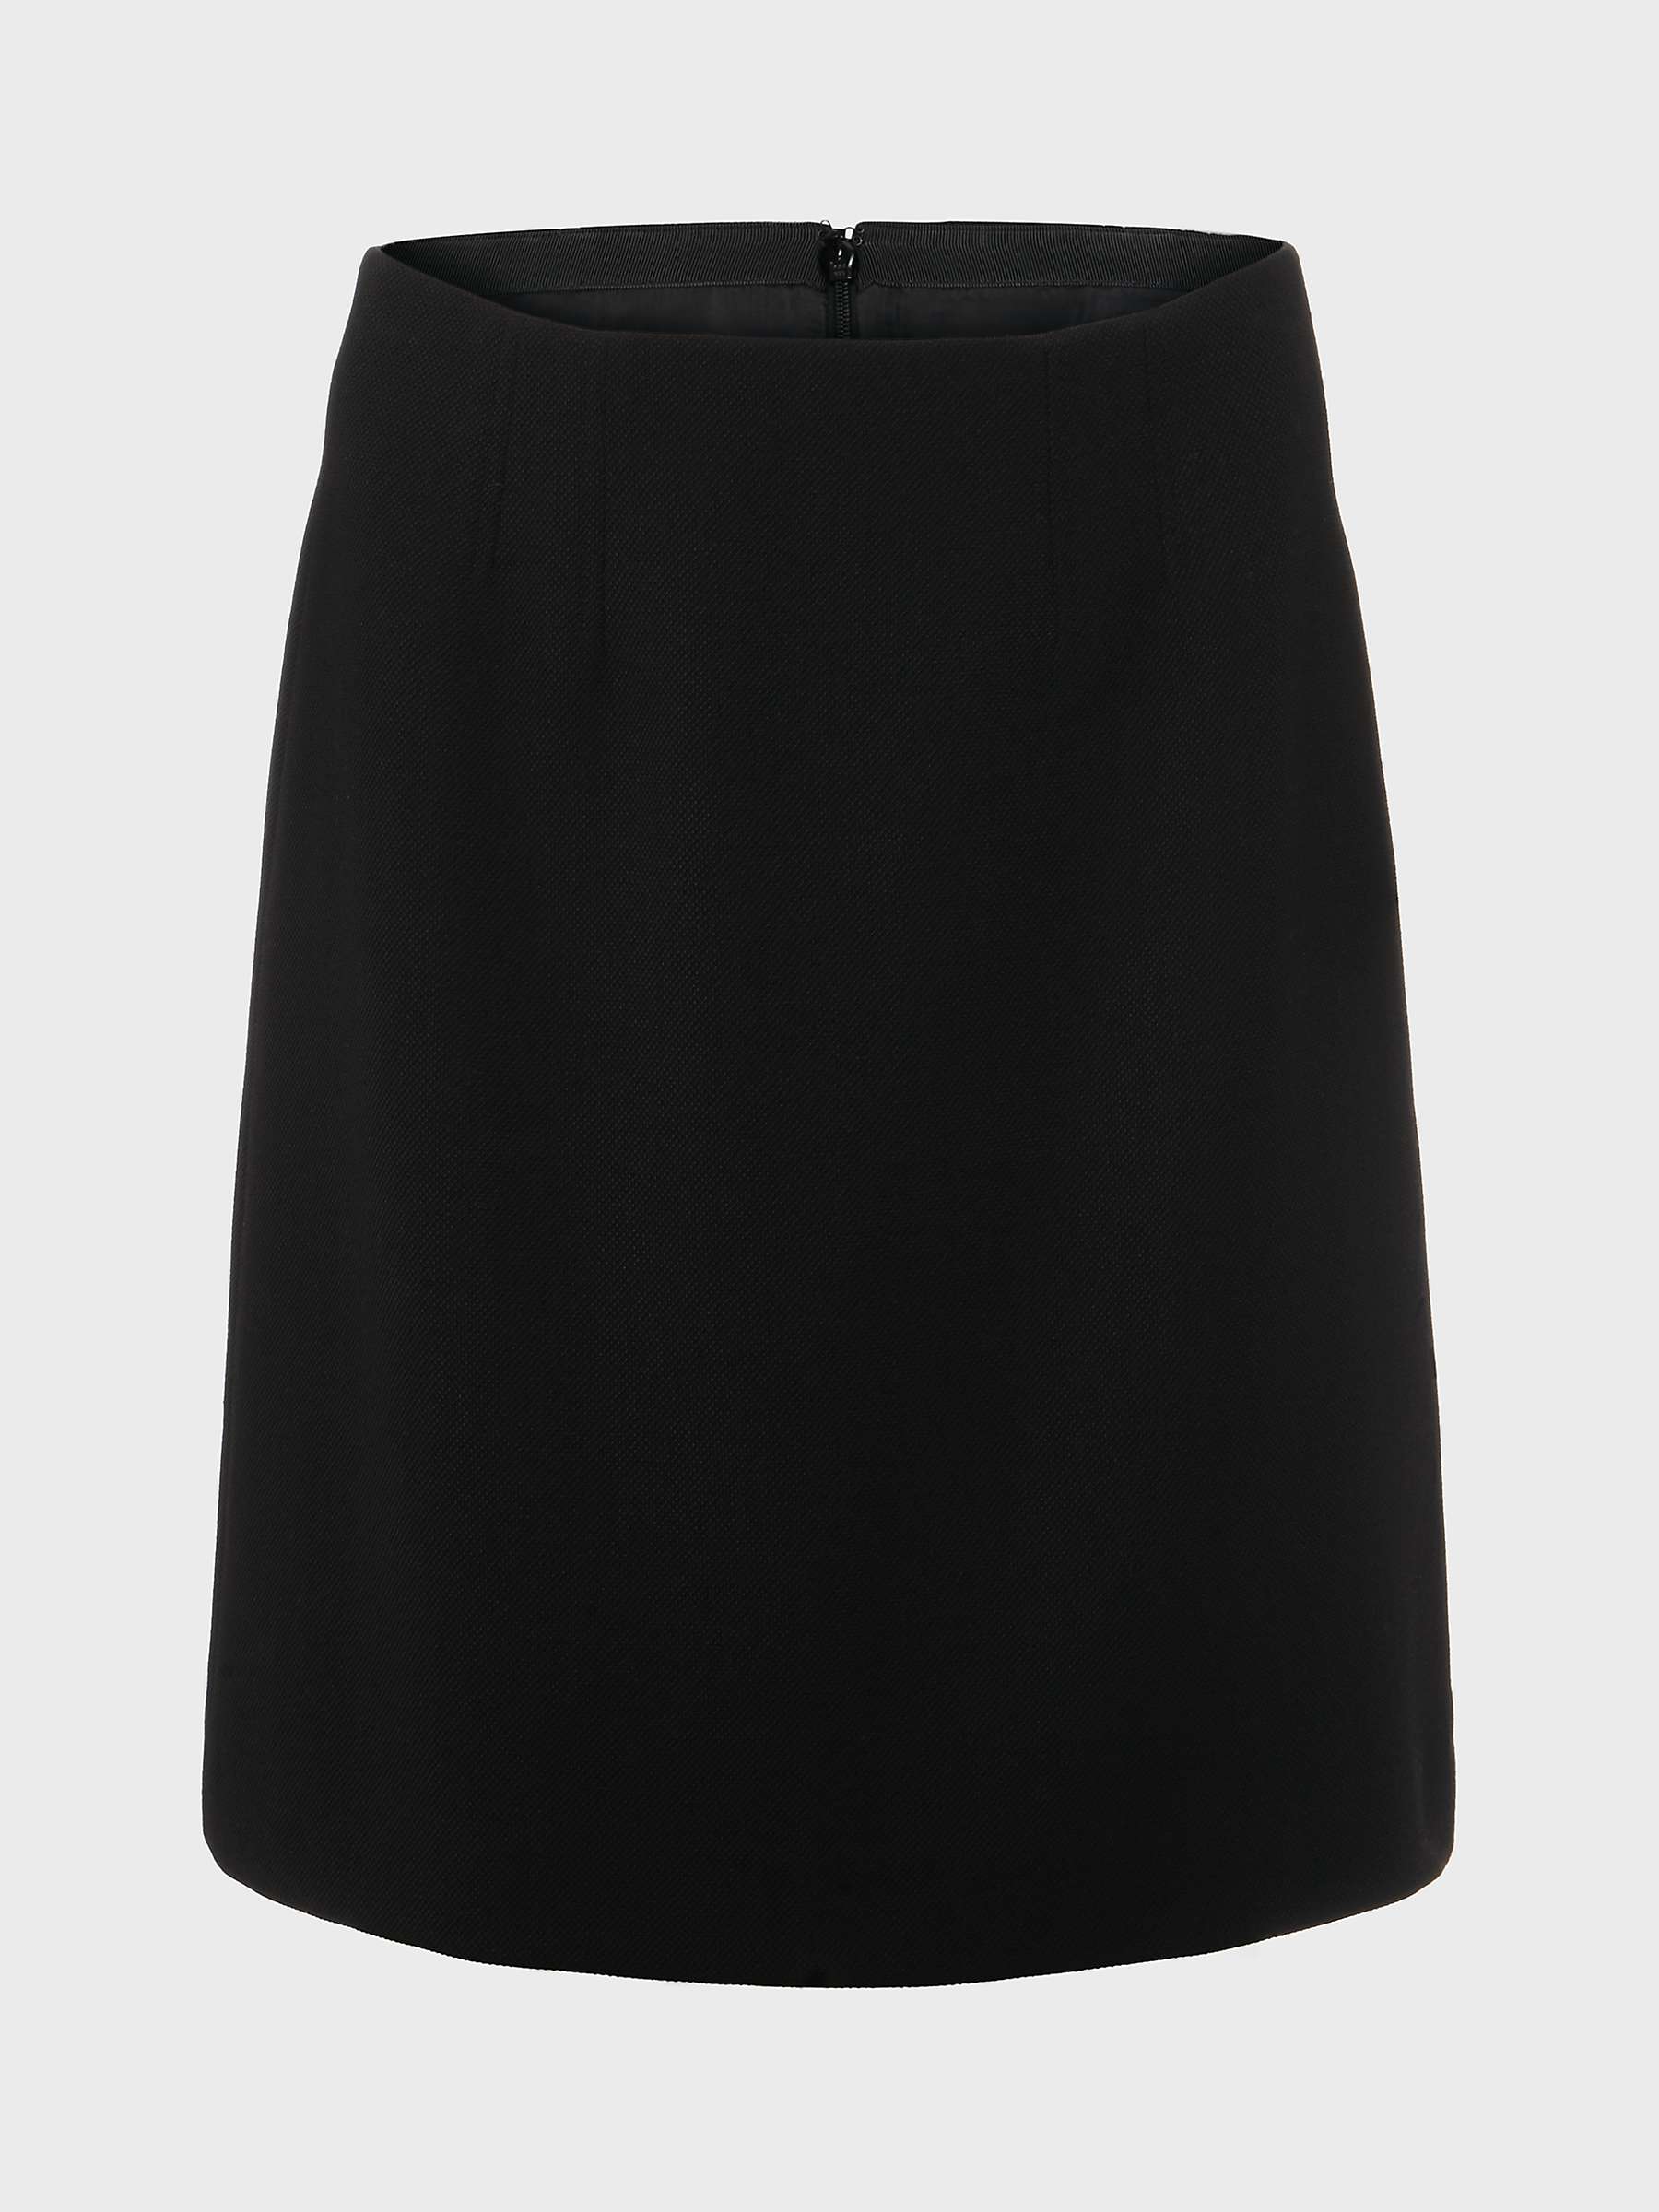 Hobbs Mia A-Line Mini Skirt, Black at John Lewis & Partners